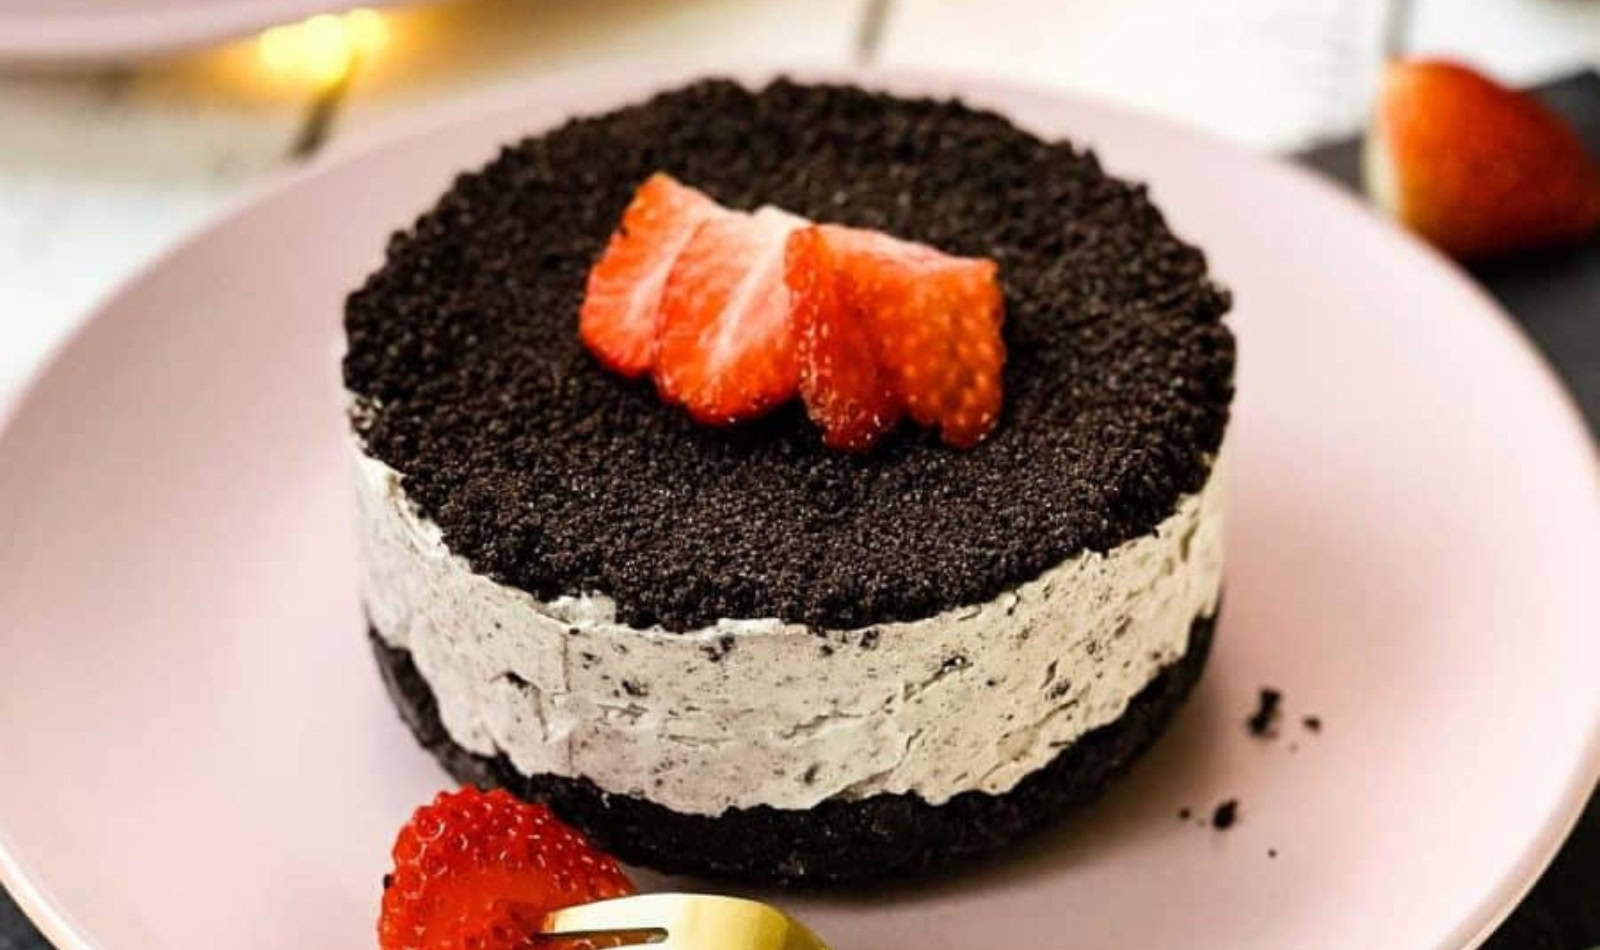 a mini Oreo cheesecake with strawberries